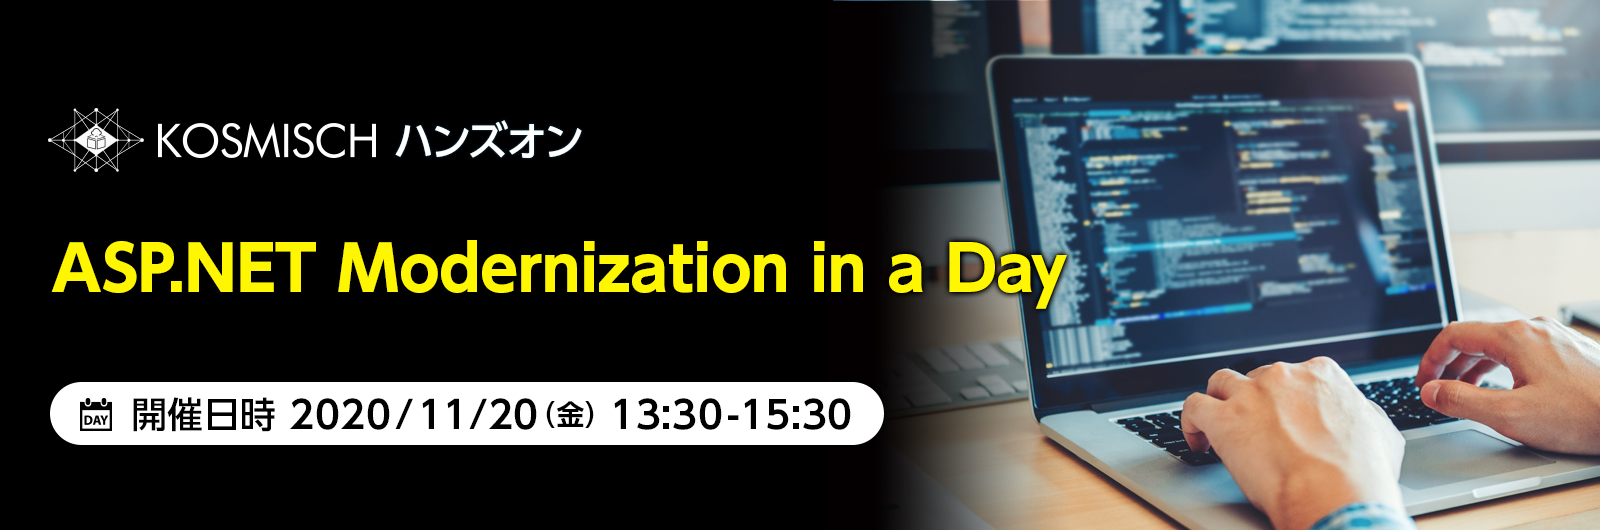 「KOSMISCH全国キャラバン」ハンズオンを日本マイクロソフトと共催でオンライン開催